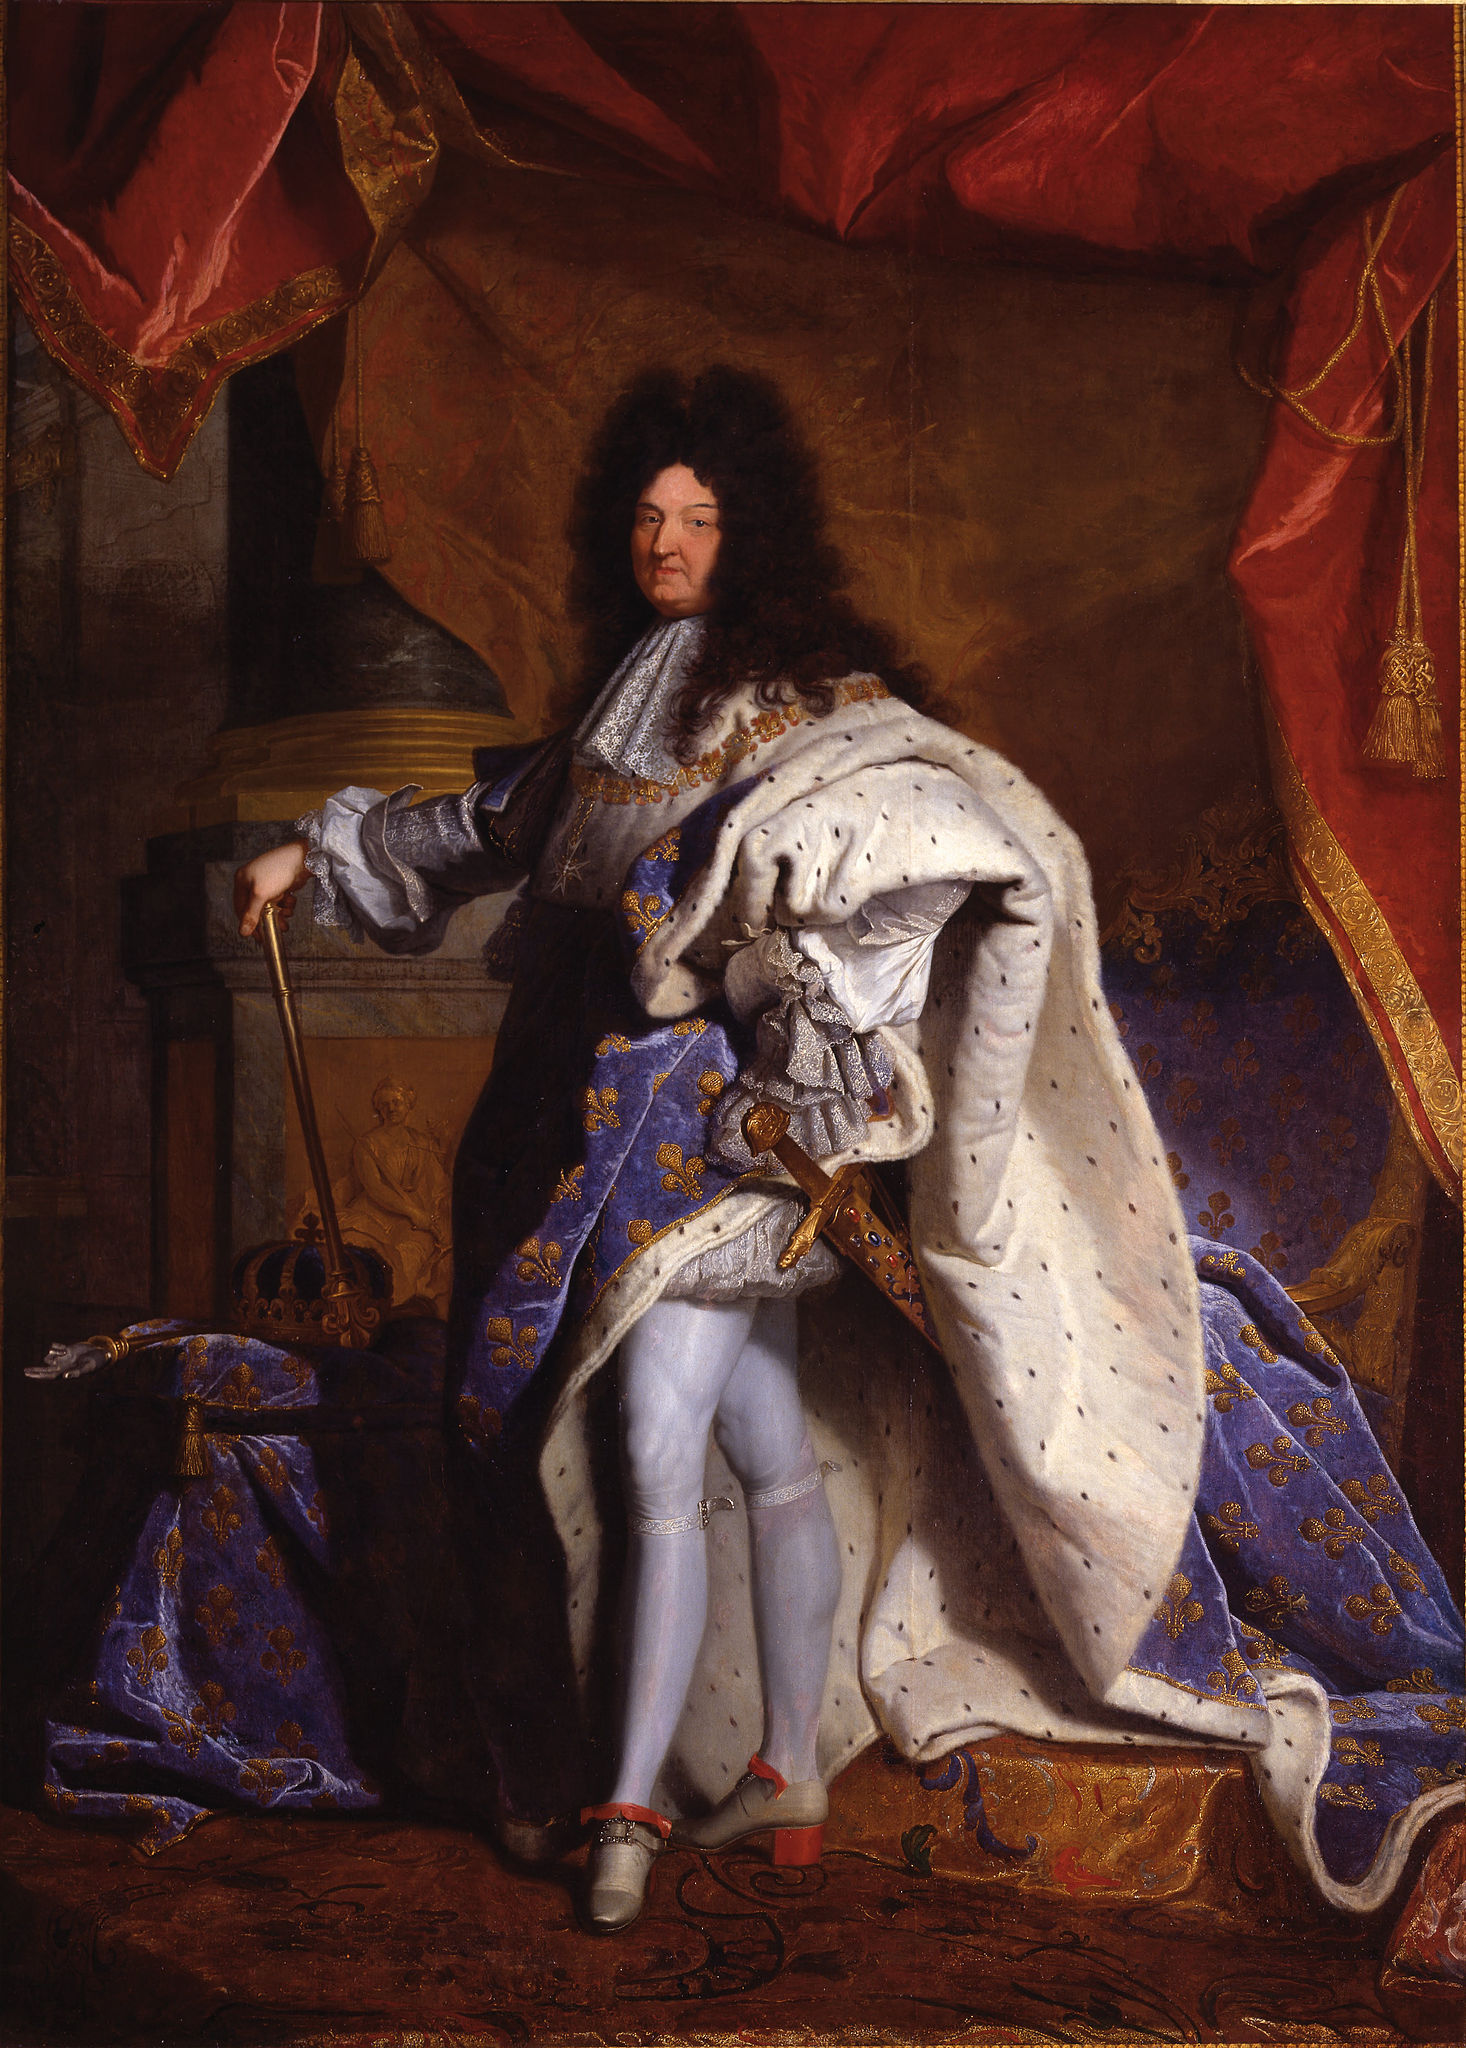 1466px-Hyacinthe_Rigaud_-_Louis_XIV_roi_de_France_1638-1715_-_Google_Art_Project.jpg